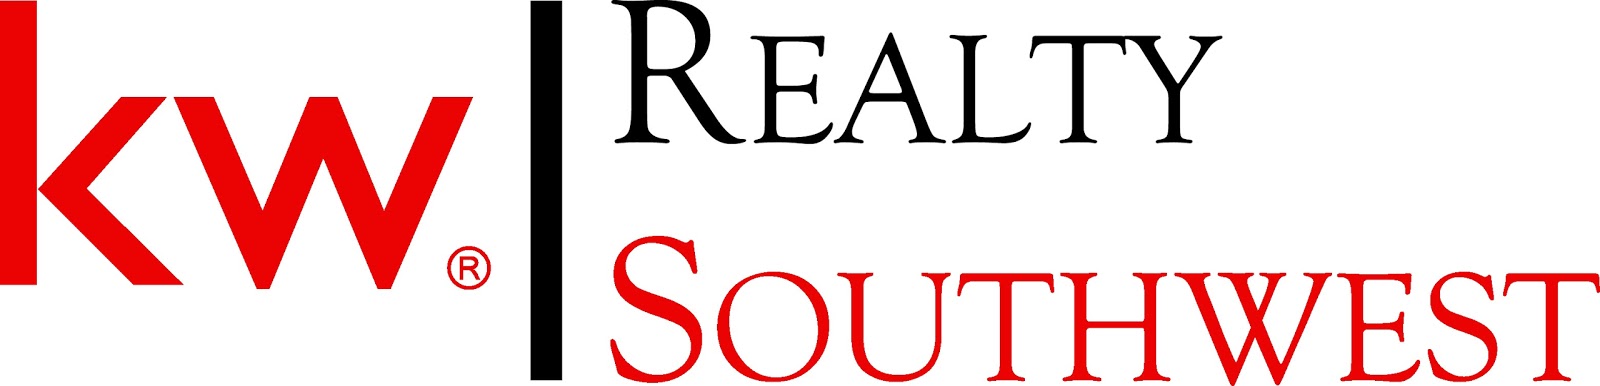 Top Realtors work with Keller Williams Realty Southwest